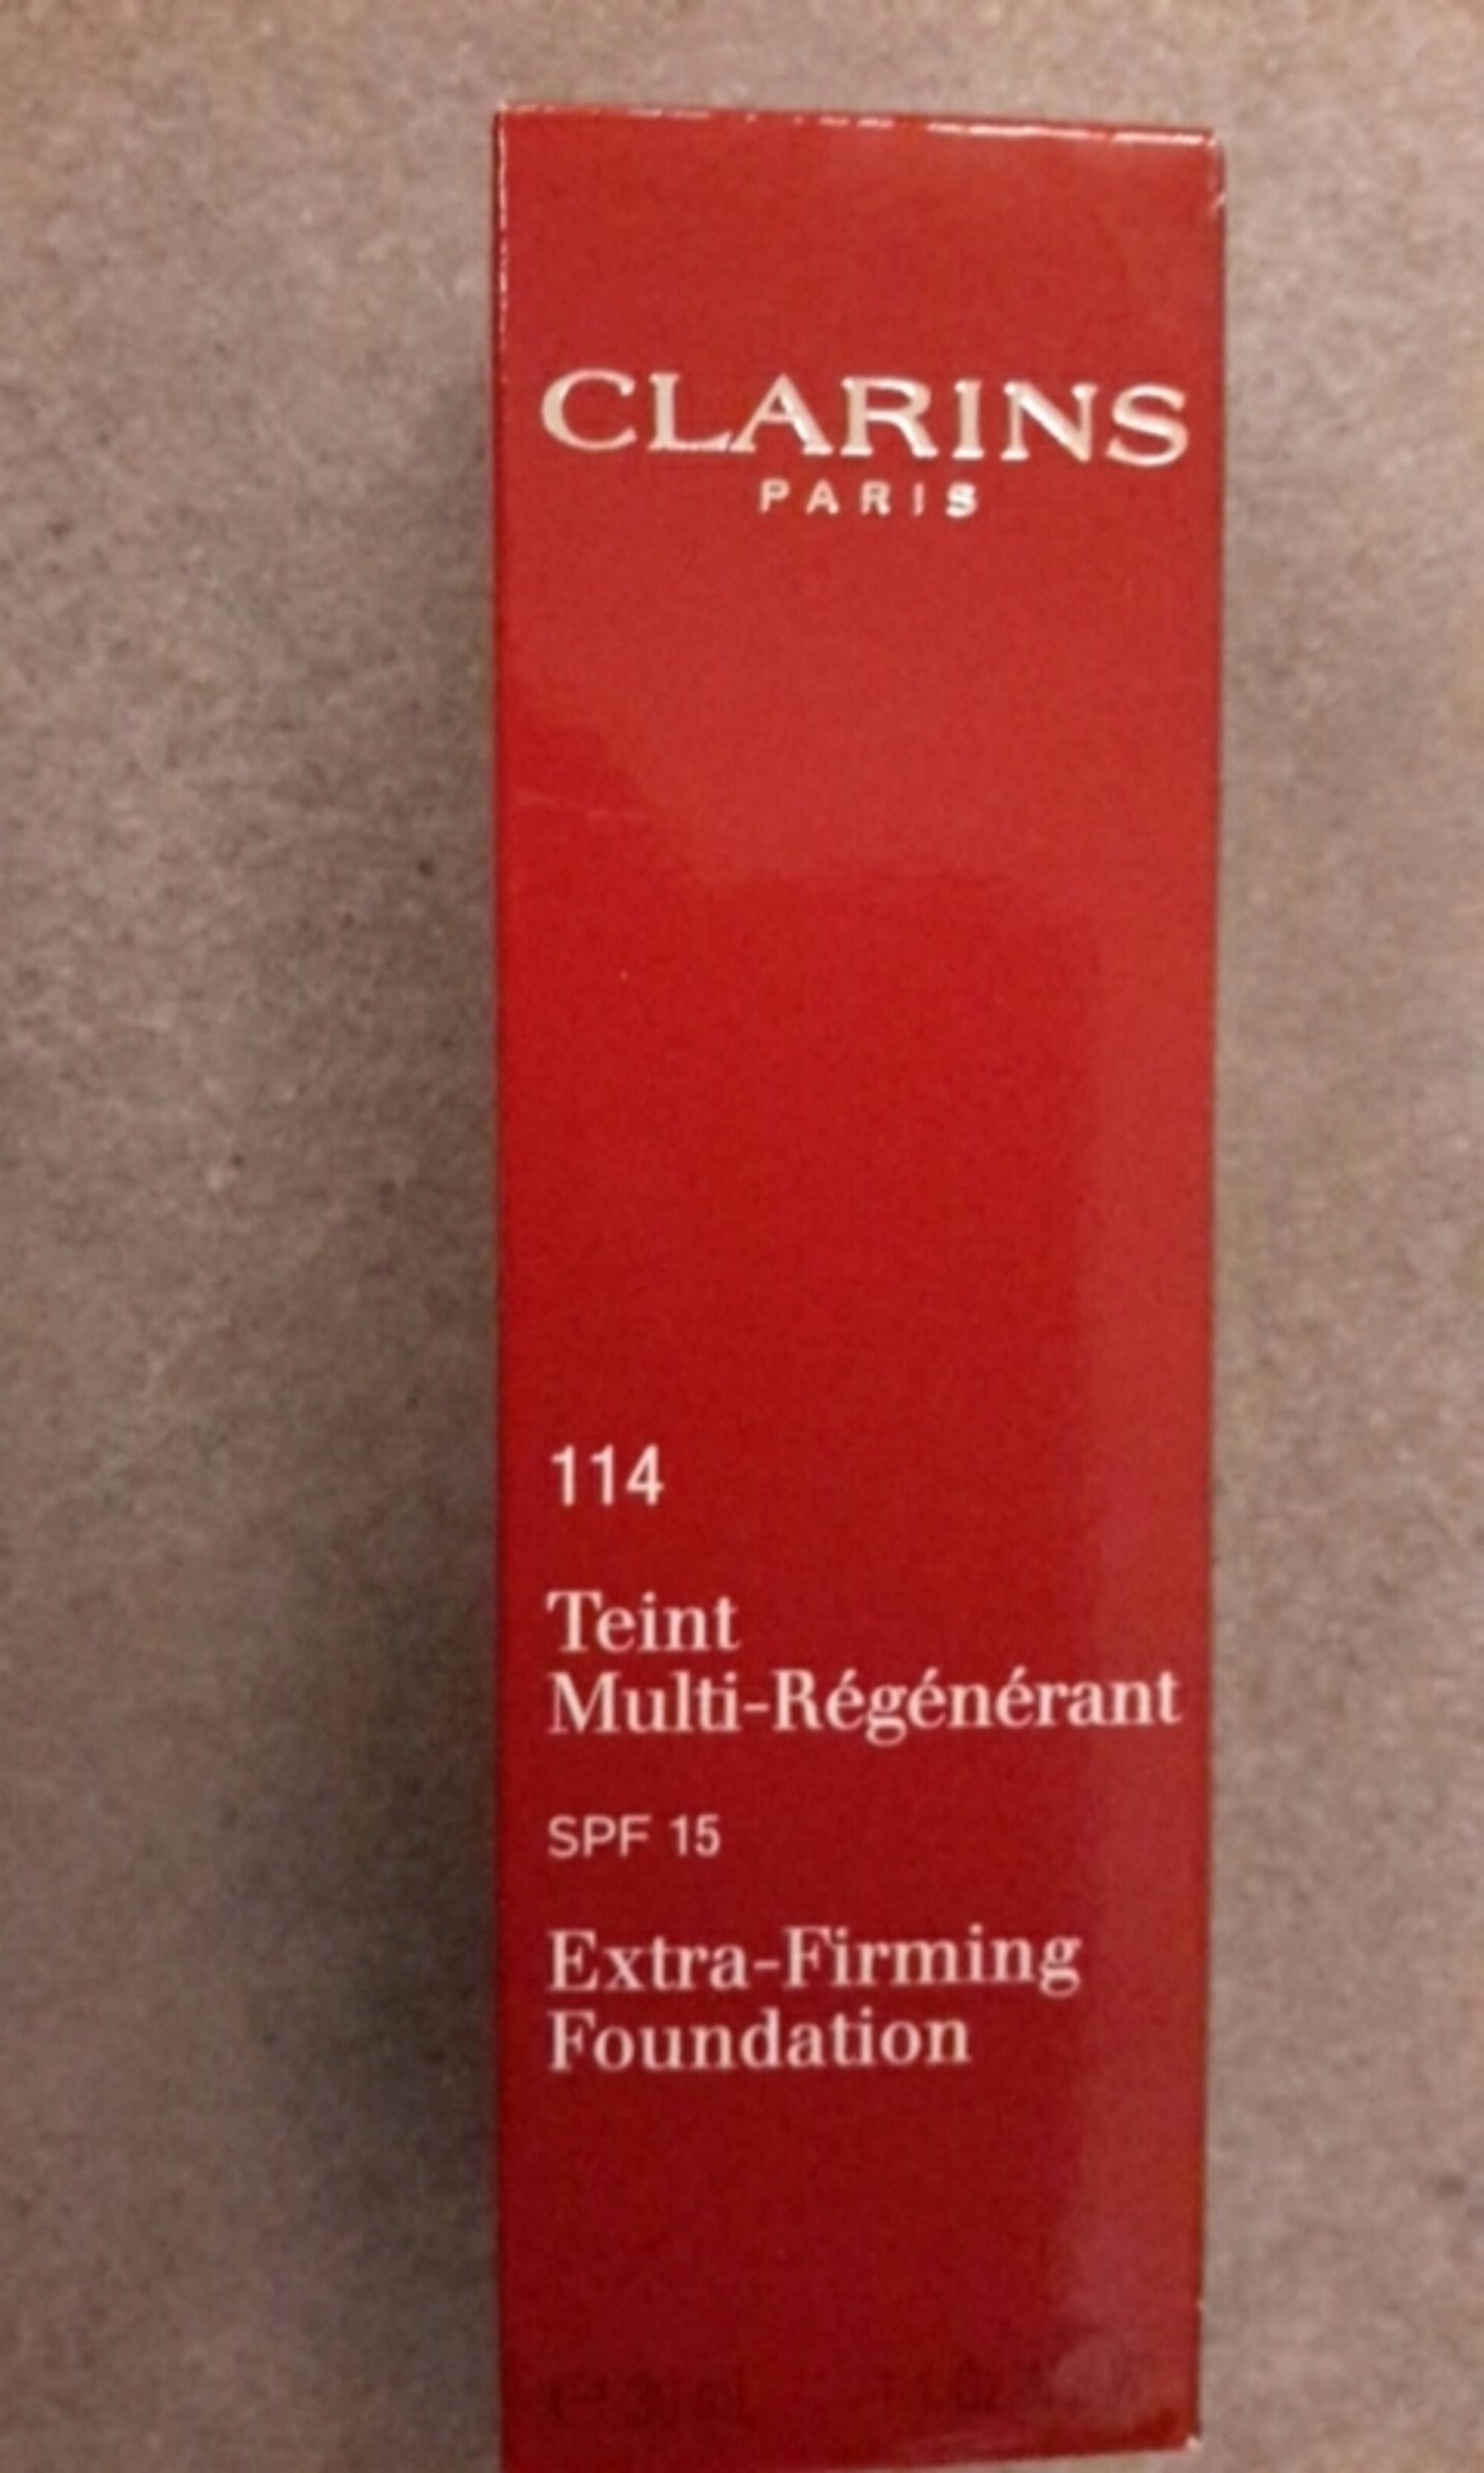 CLARINS - Teint Multi-Régénérant SPF 15 - 114